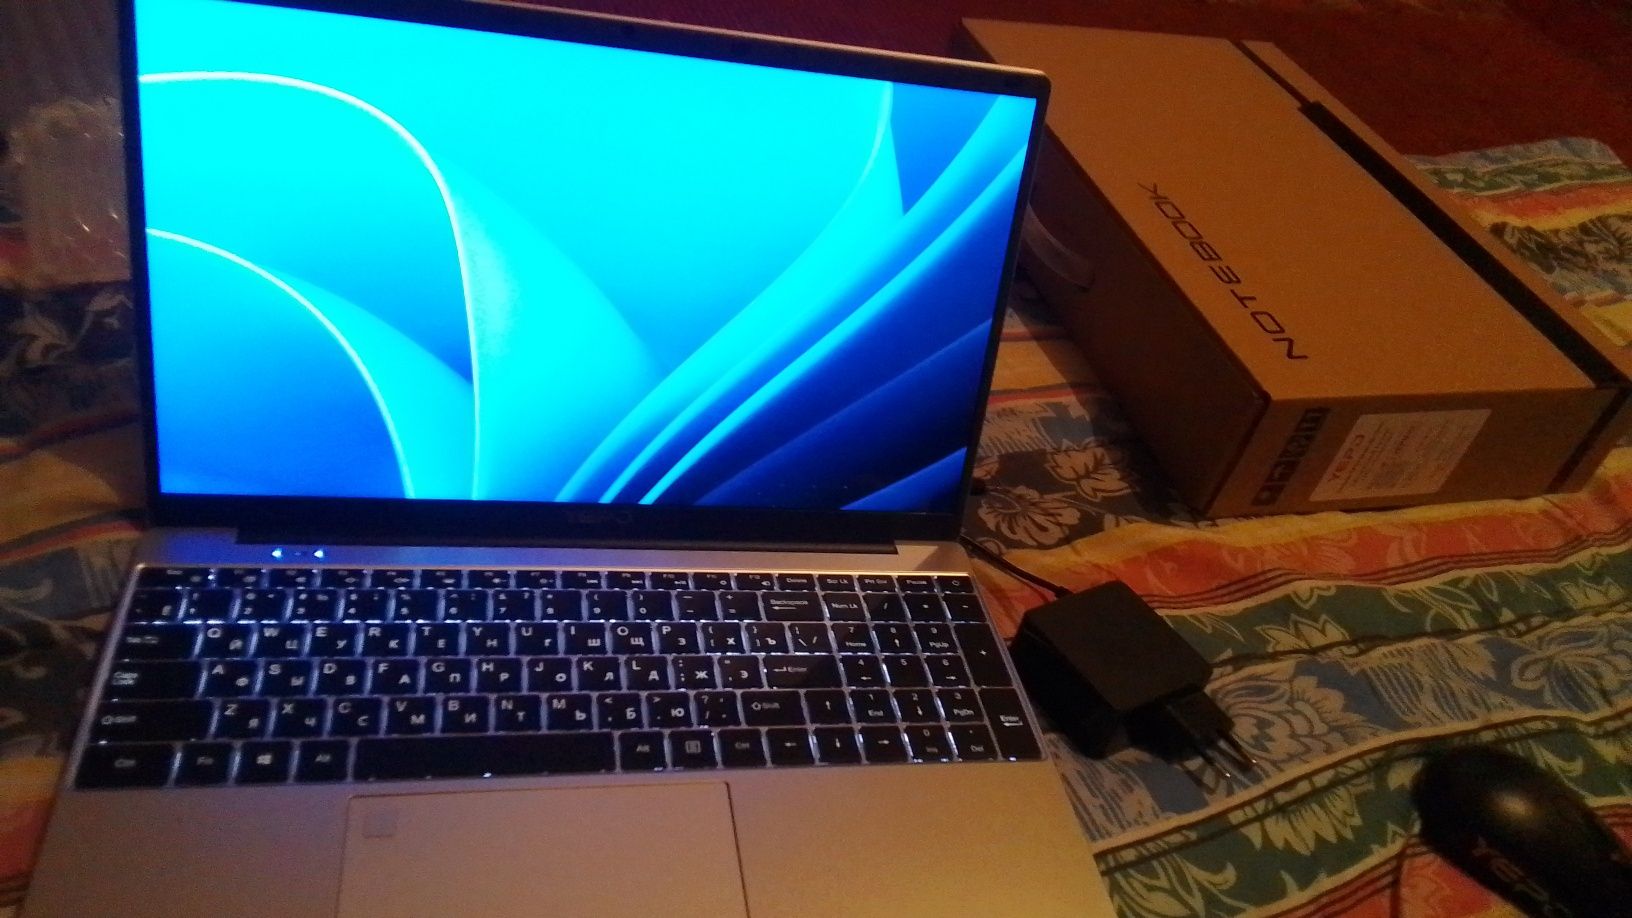 Yepo i12 ноутбук с гарантией новый пайдаланылмаган срочнооо